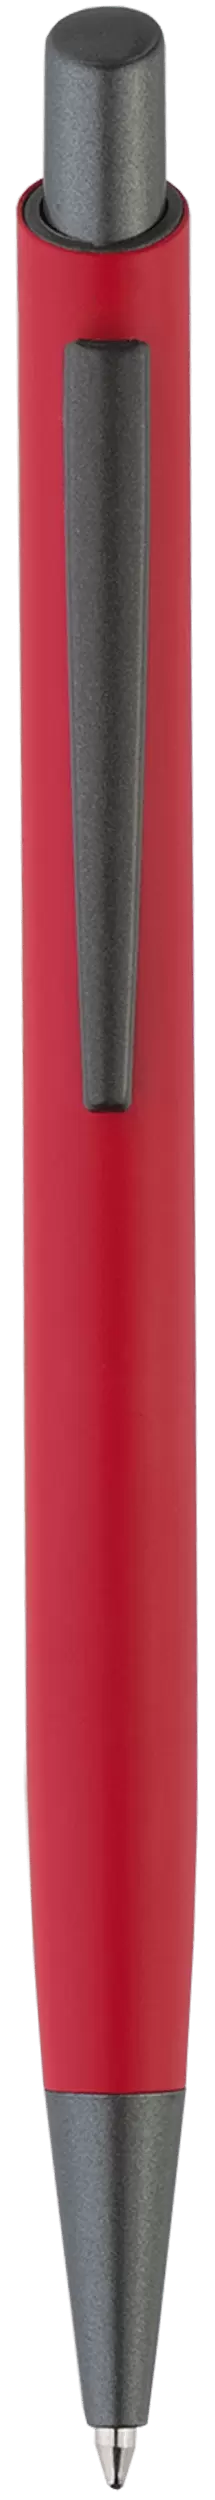 Ручка ELFARO TITAN Красная 3052-03